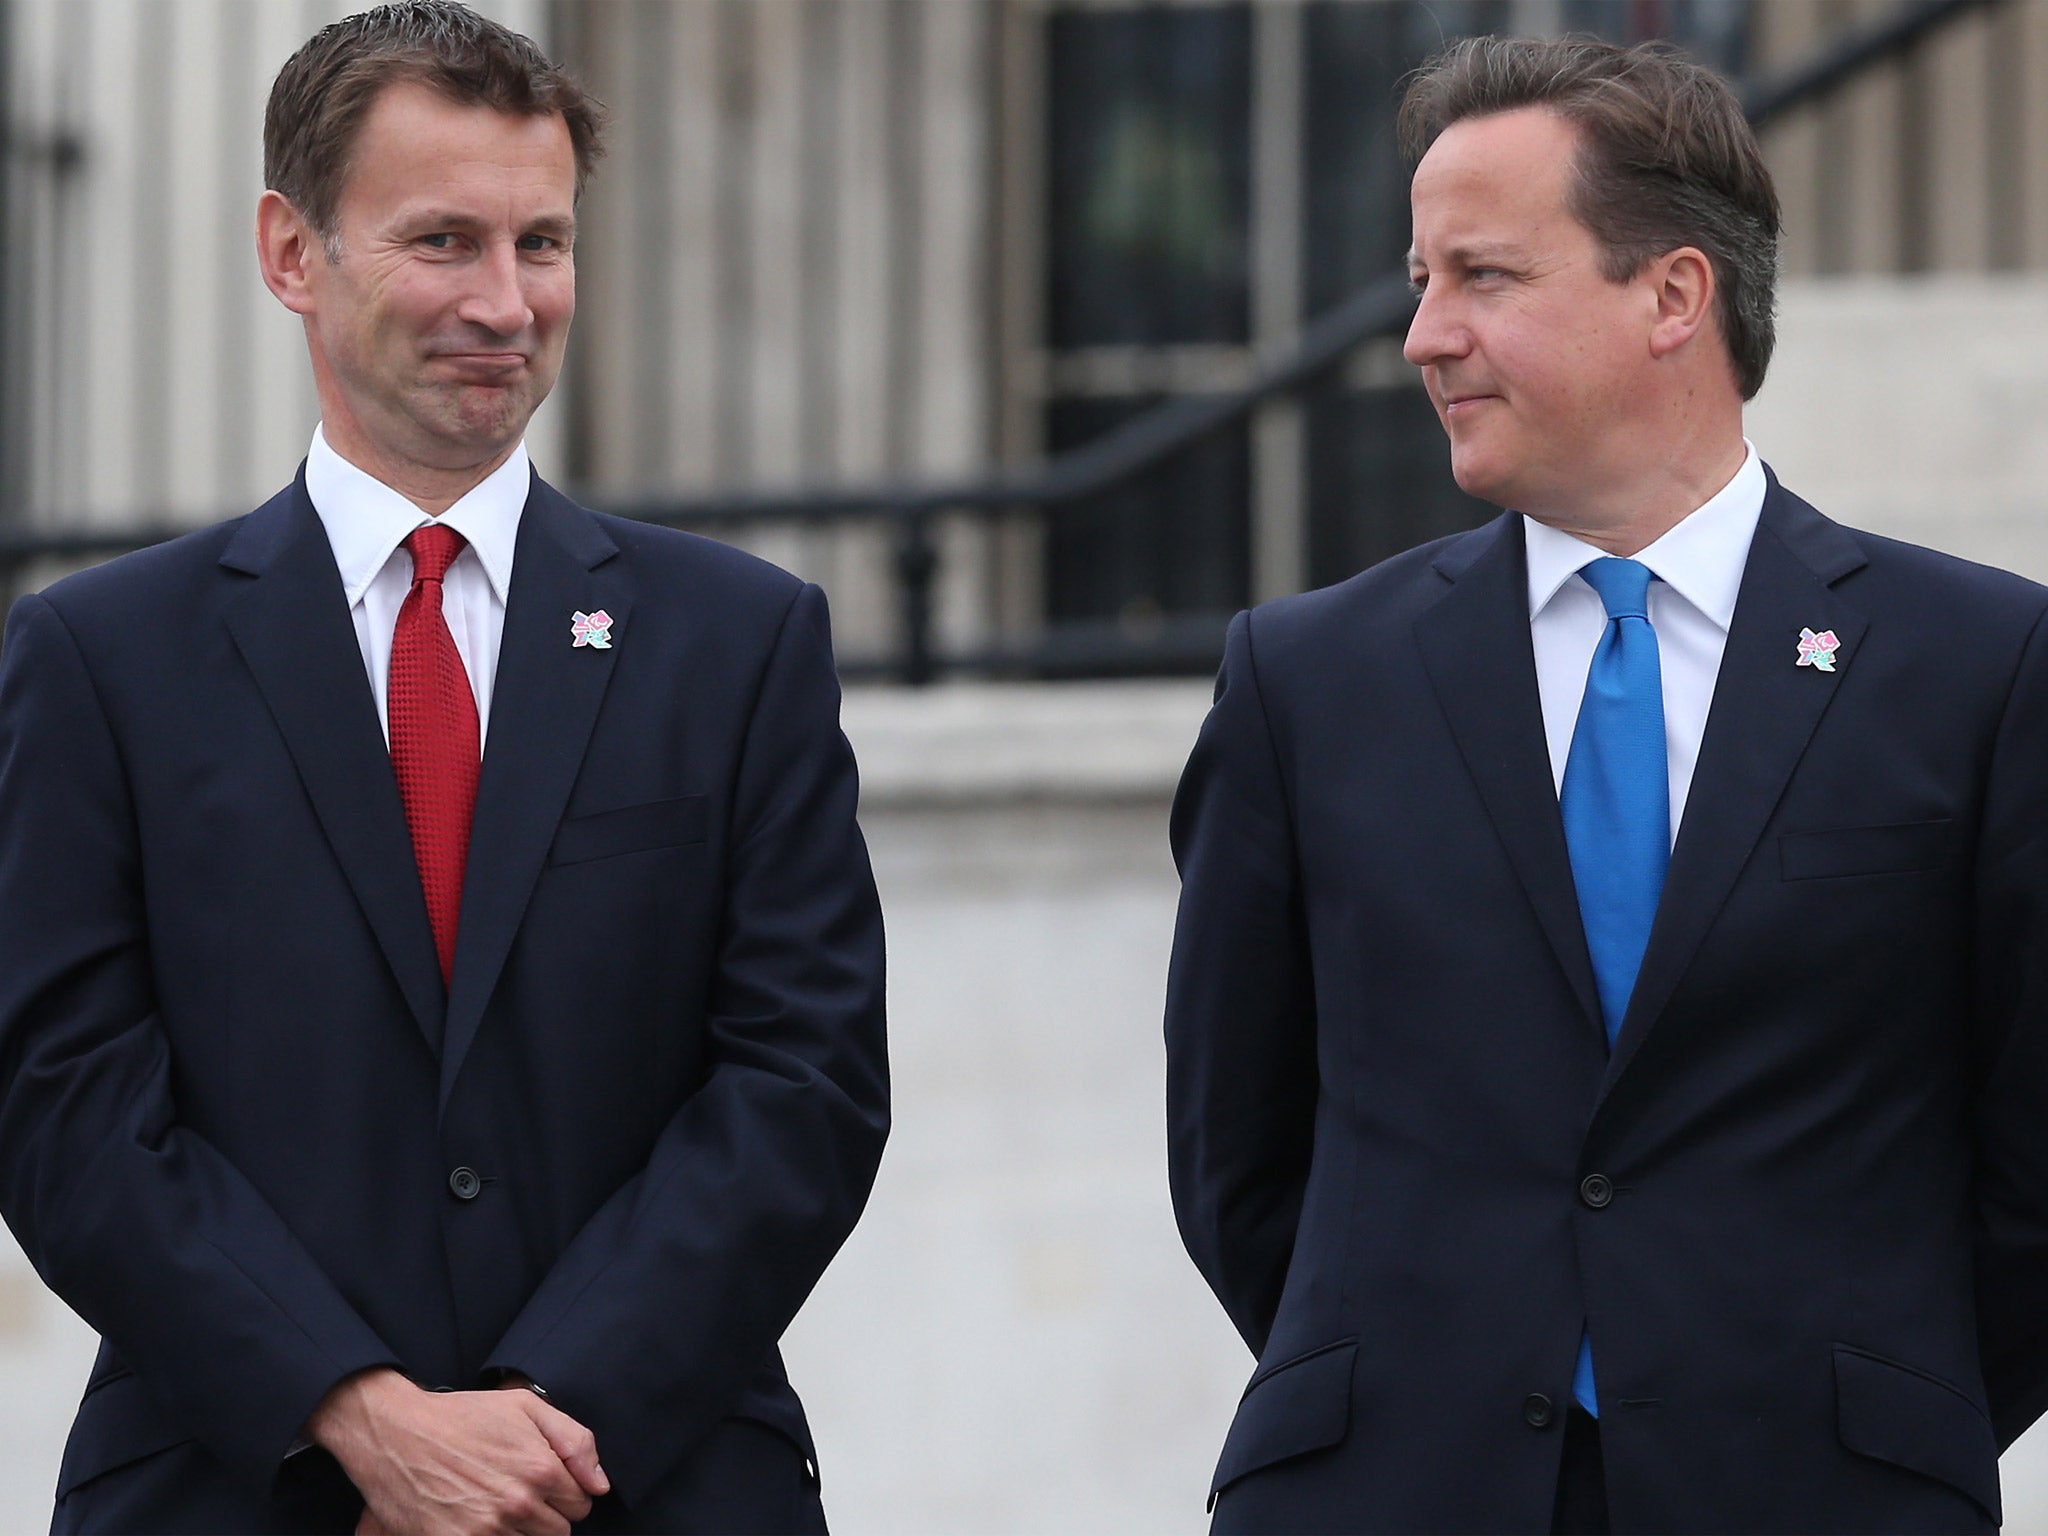 Health Secretary Jeremy Hunt with the Prime Minister, David Cameron